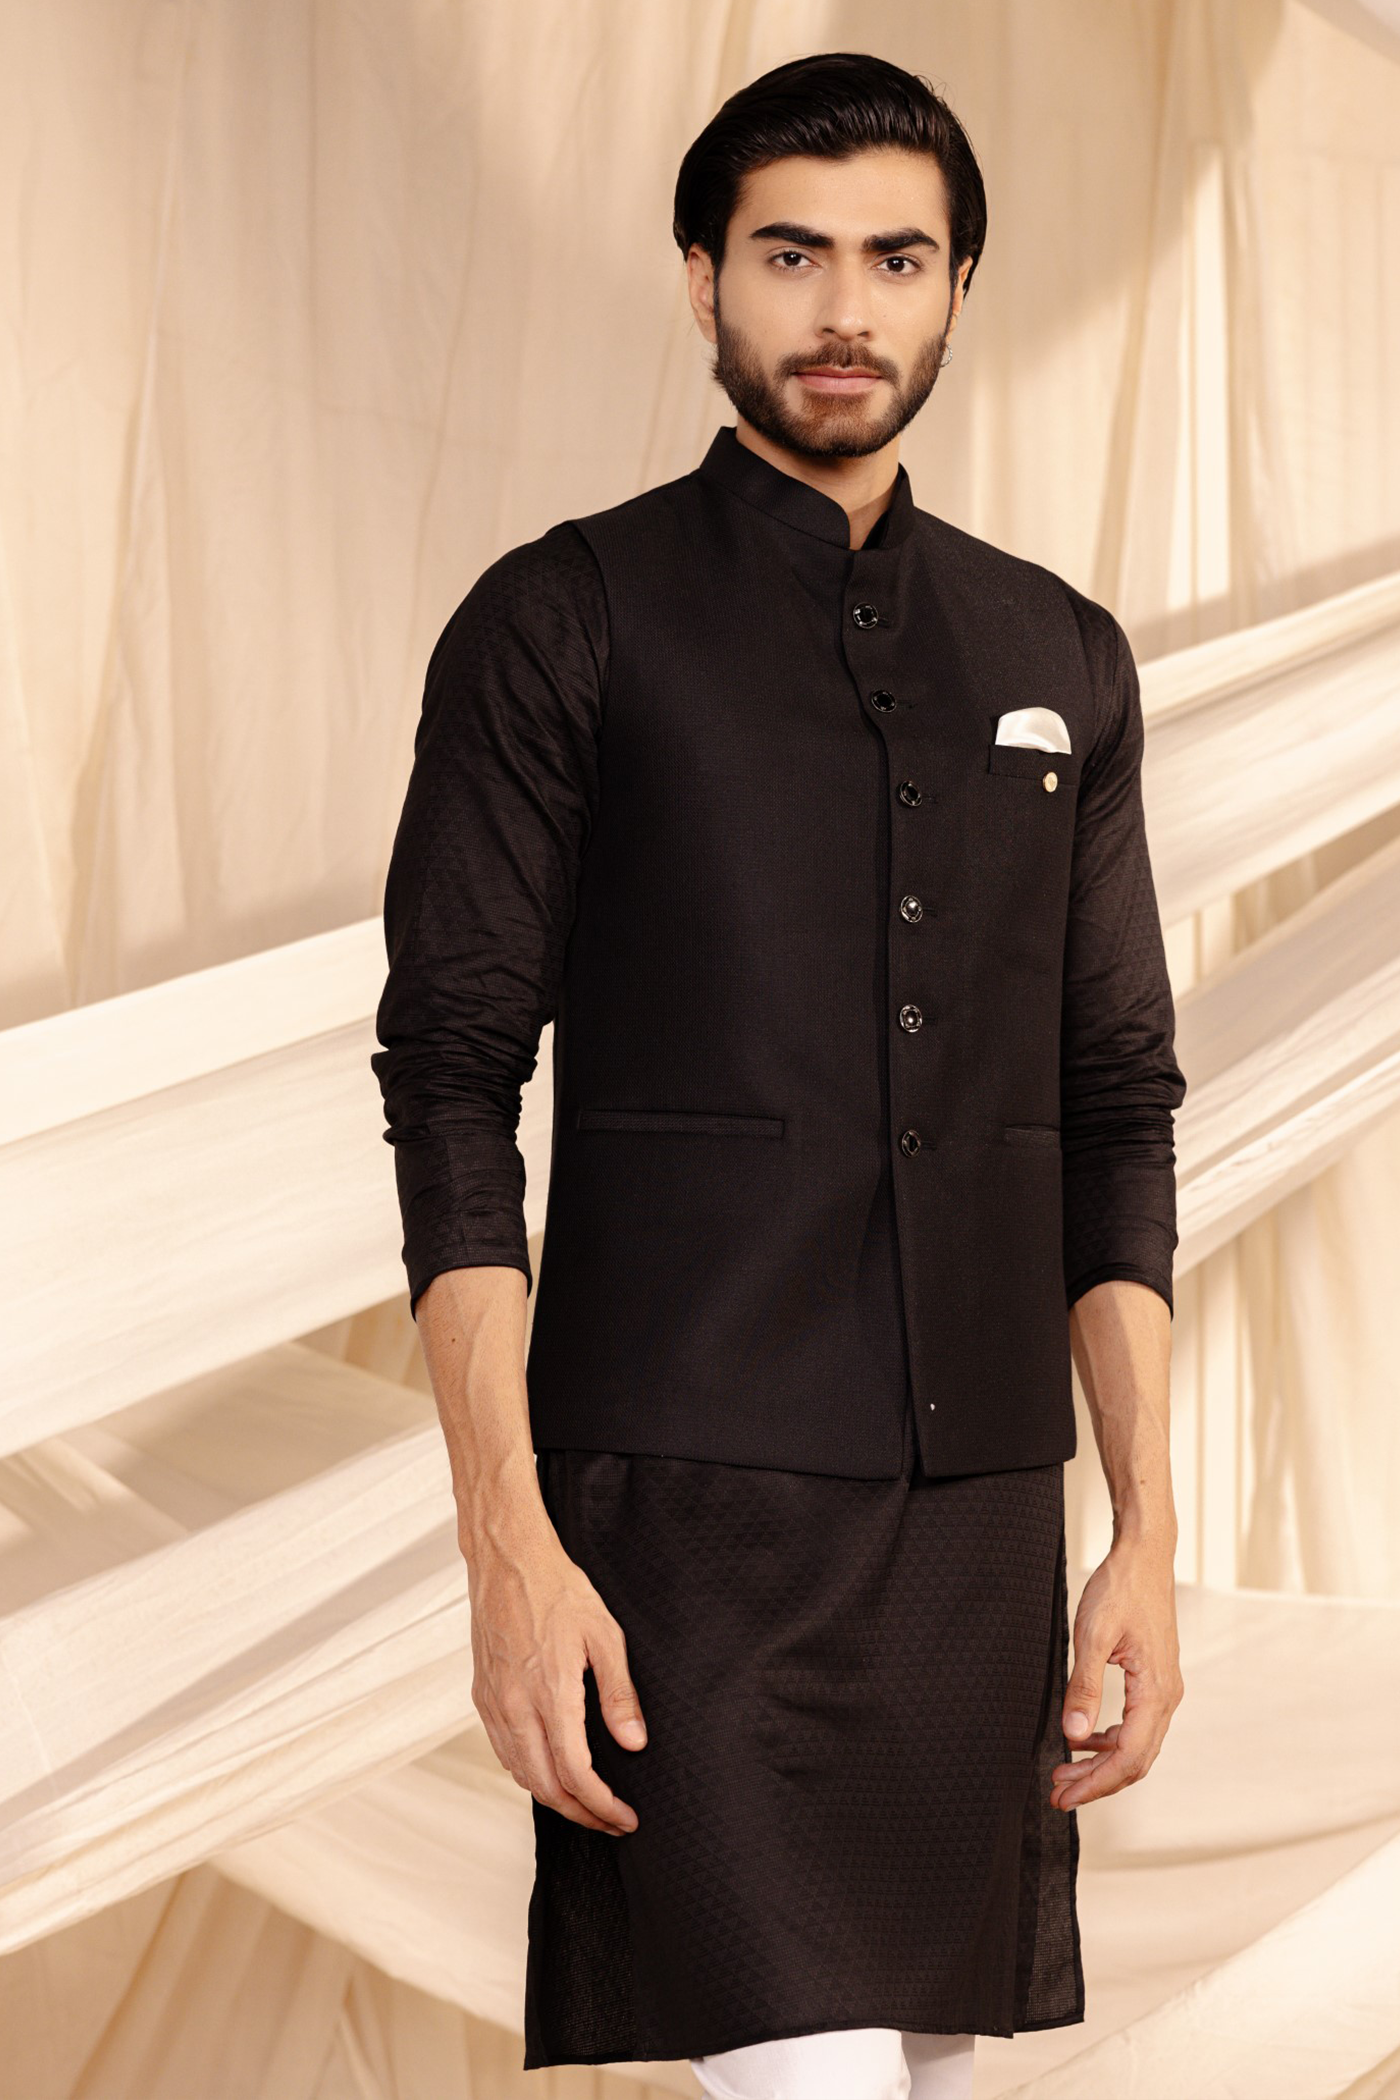 Black Colour Long Sleeve Jodhpuri Jacket Kurta